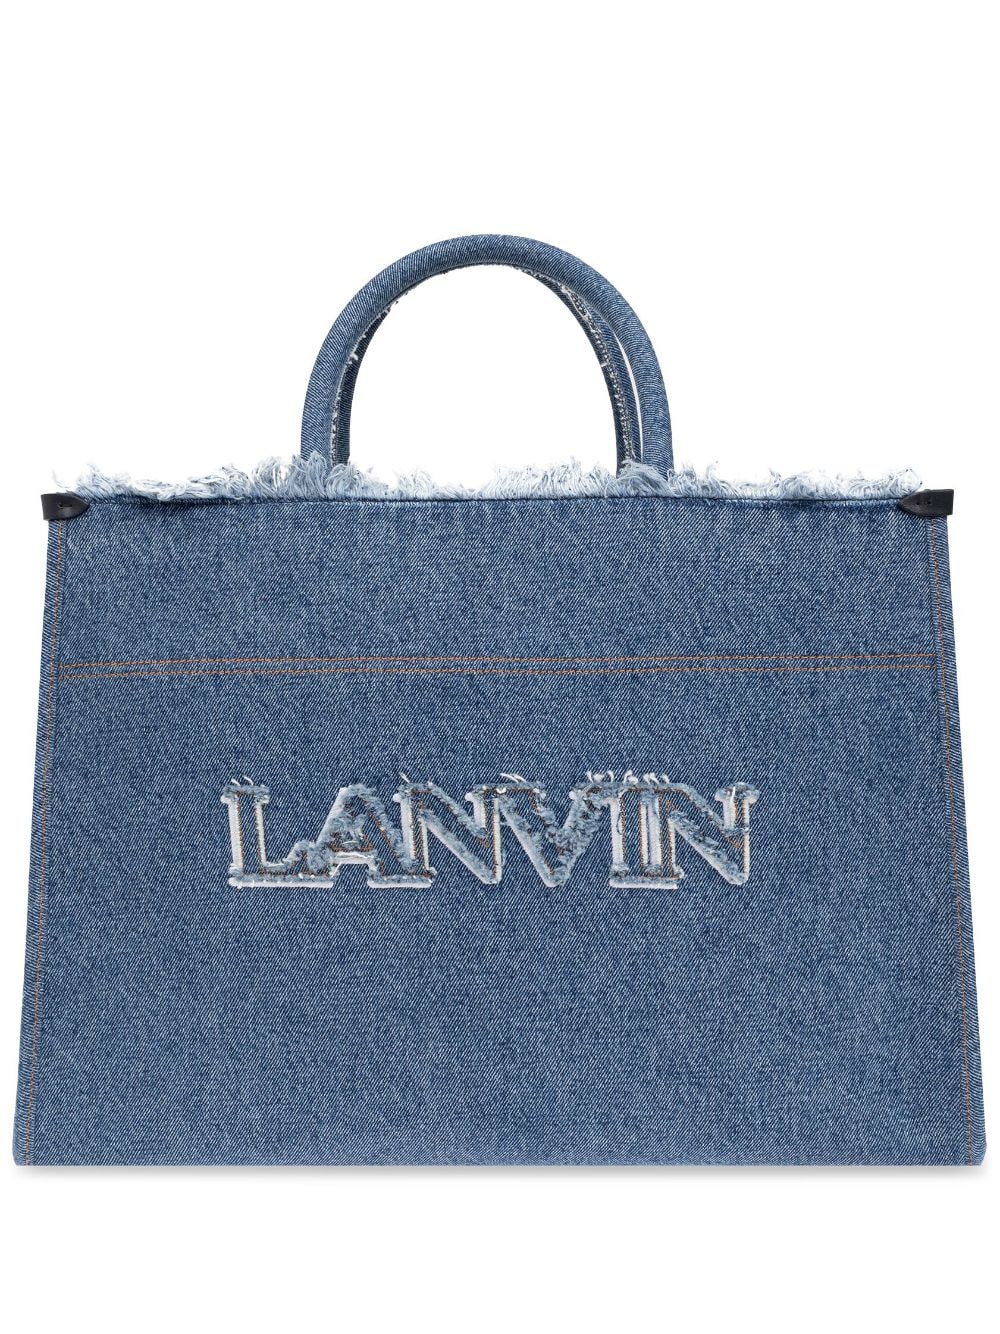 Lanvin logo-embroidered tote bag - Blue von Lanvin